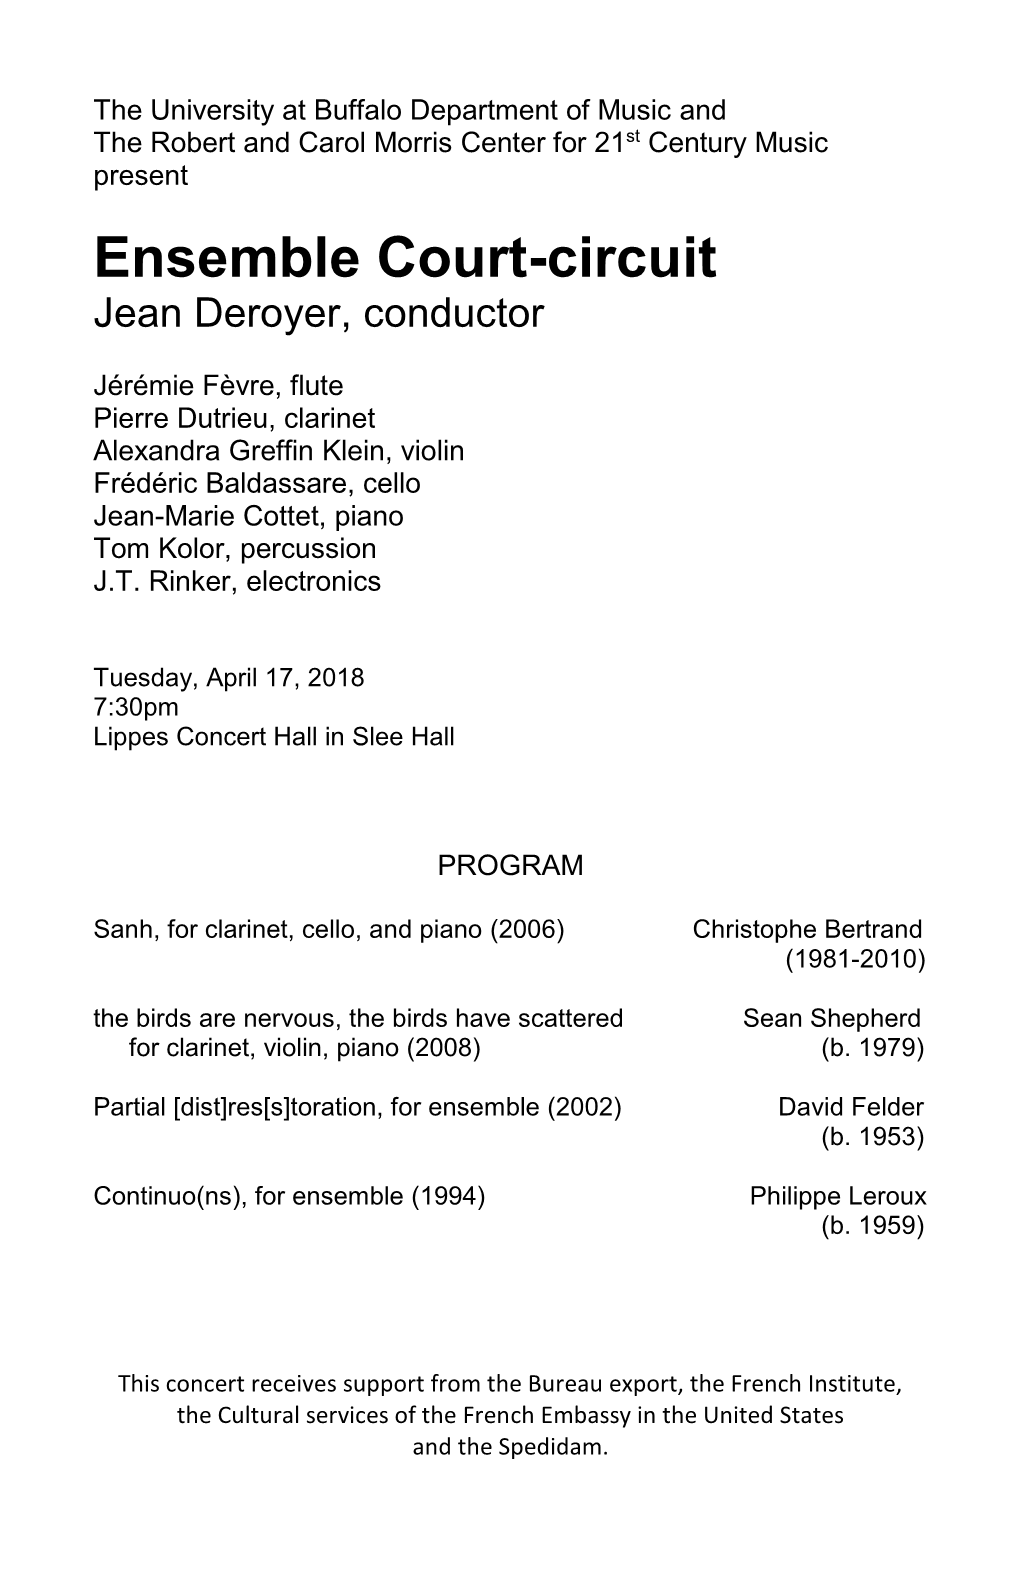 Ensemble Court-Circuit Jean Deroyer, Conductor